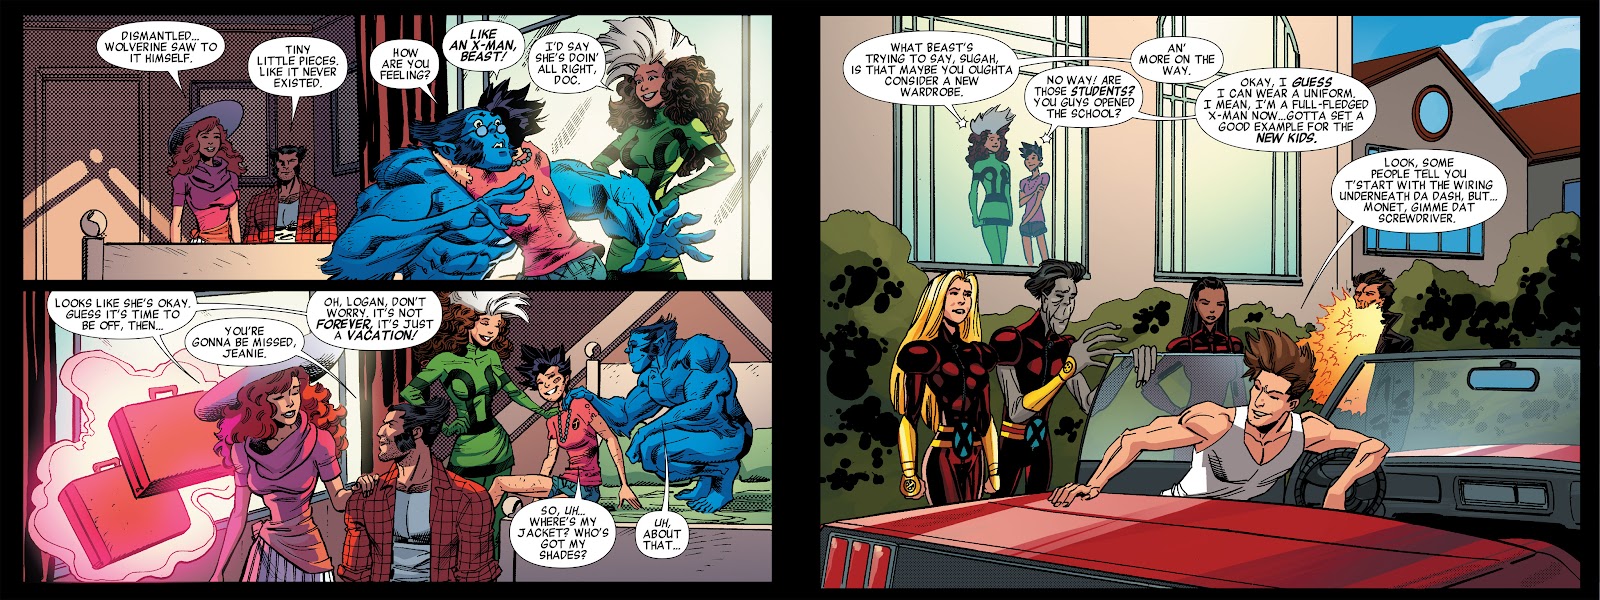 X-Men '92 (Infinite Comics) issue 8 - Page 50